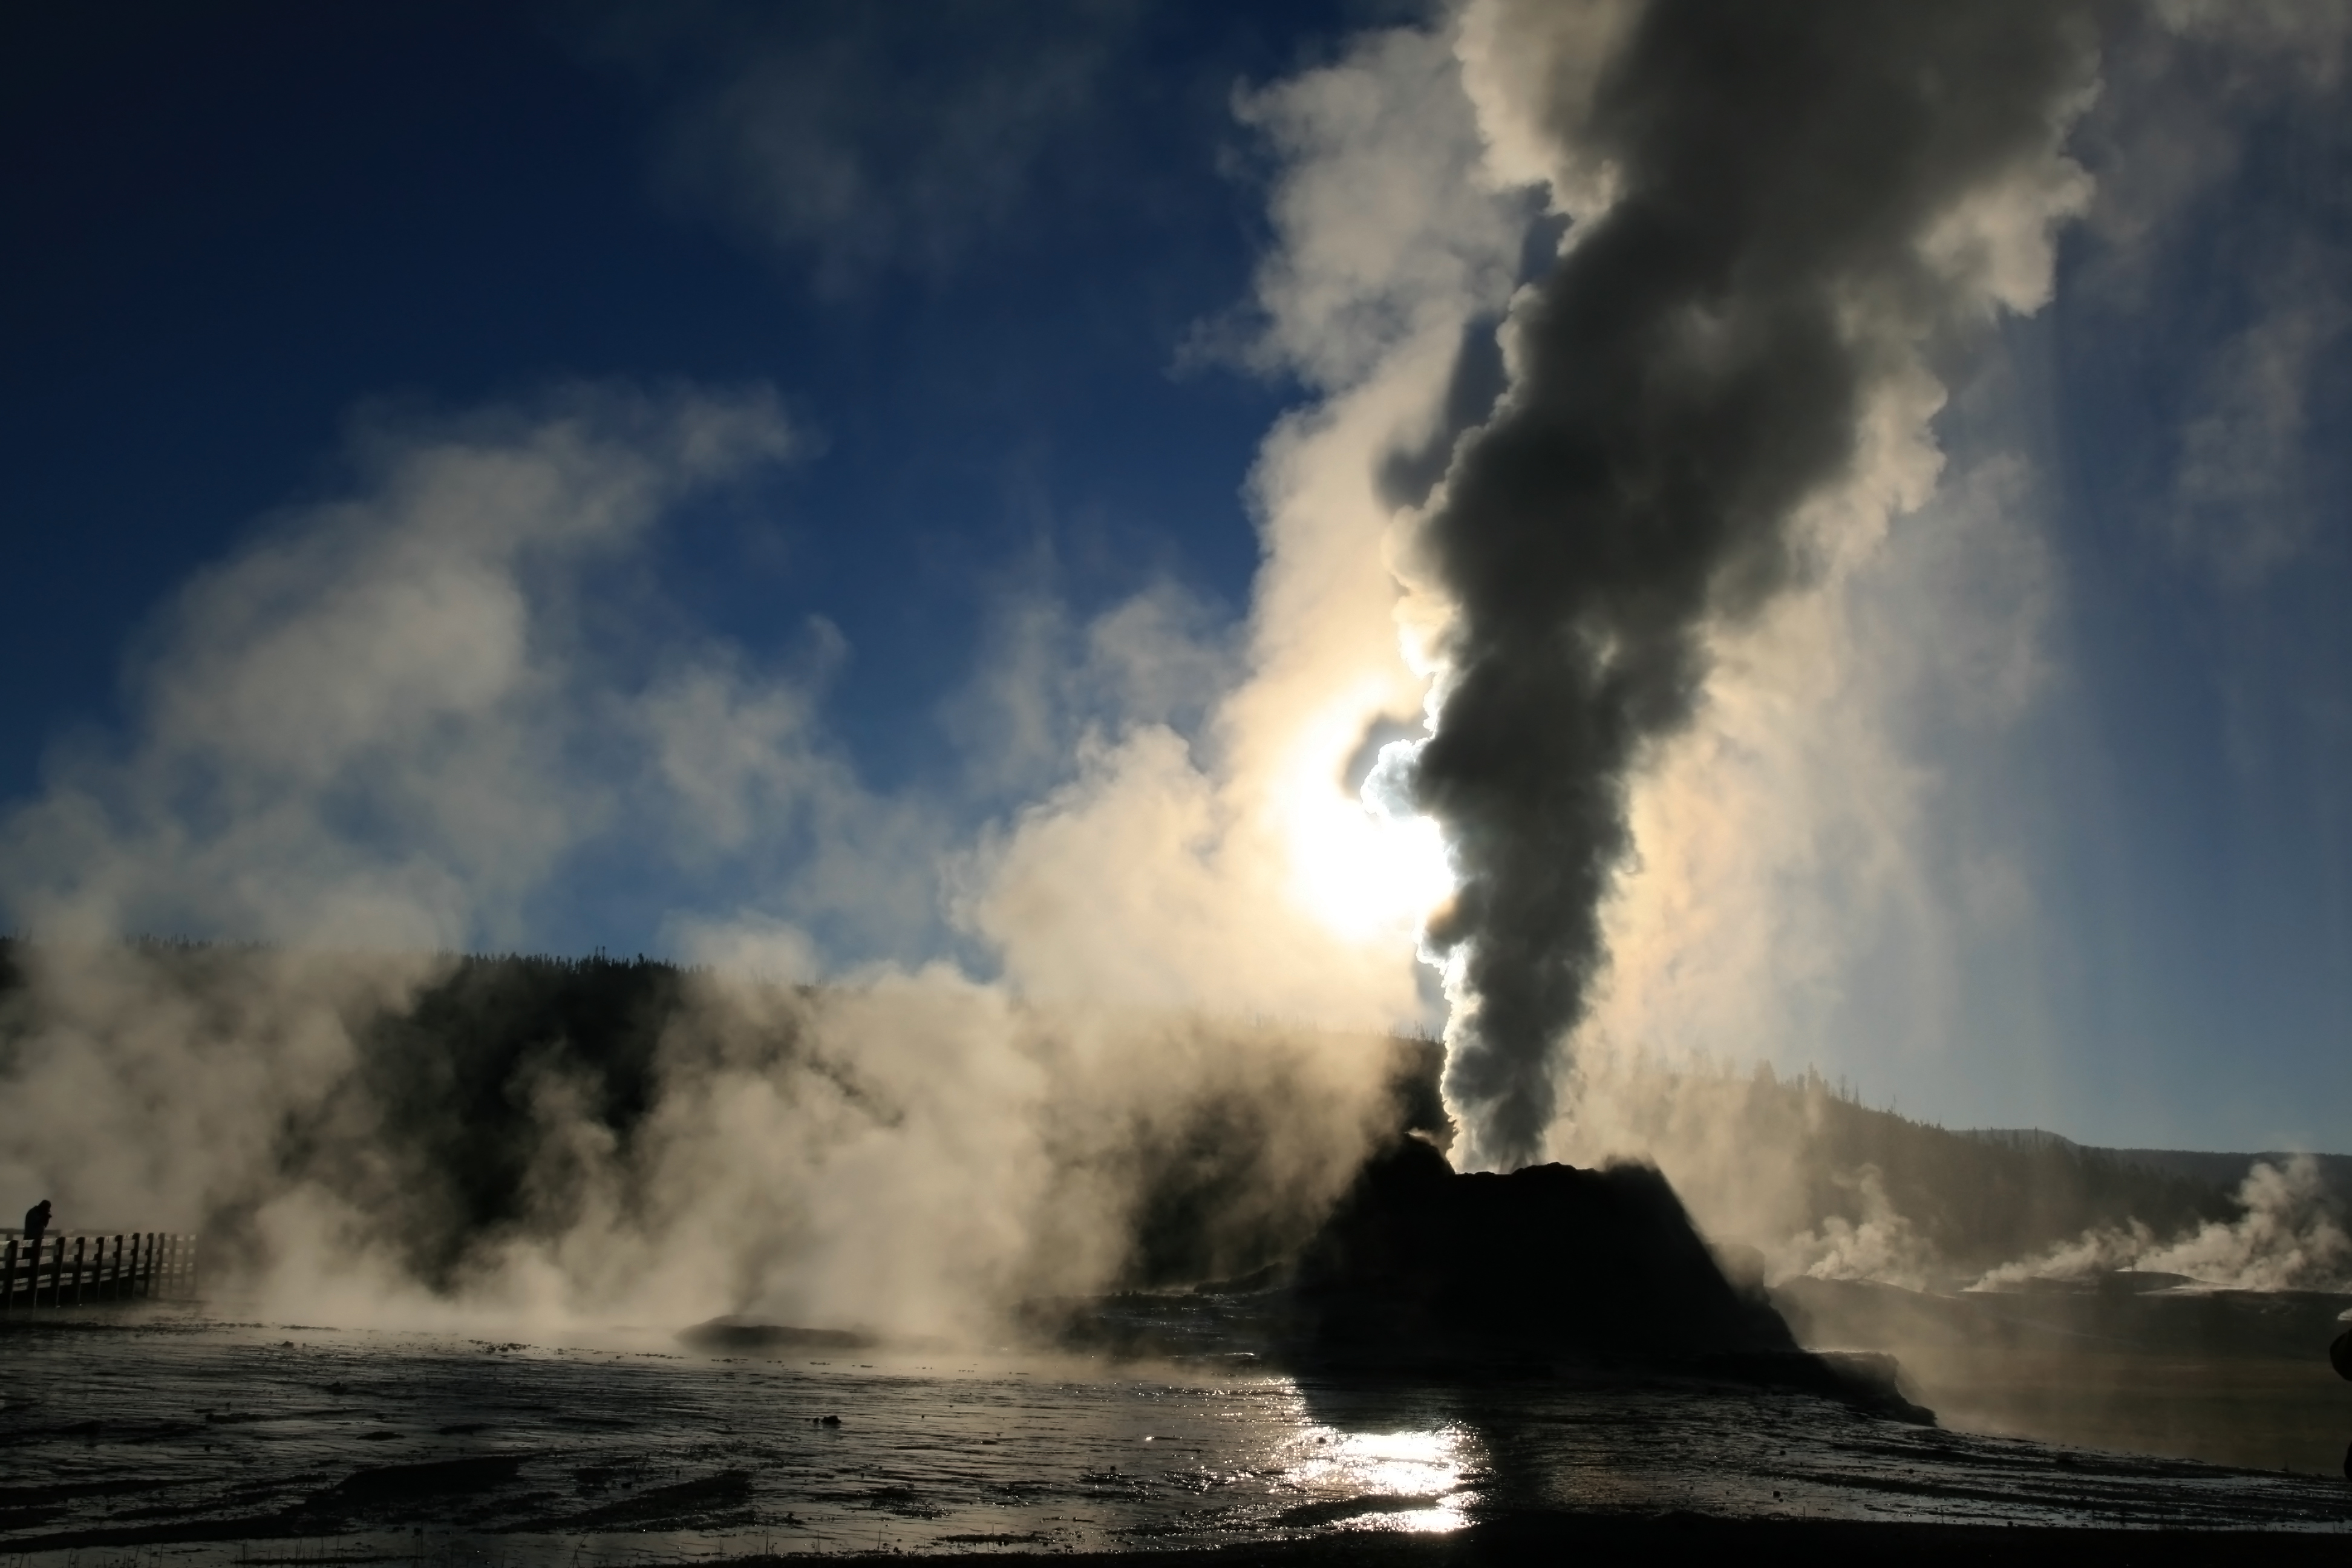 Steam Phase eruption of Castle geyser with shadows